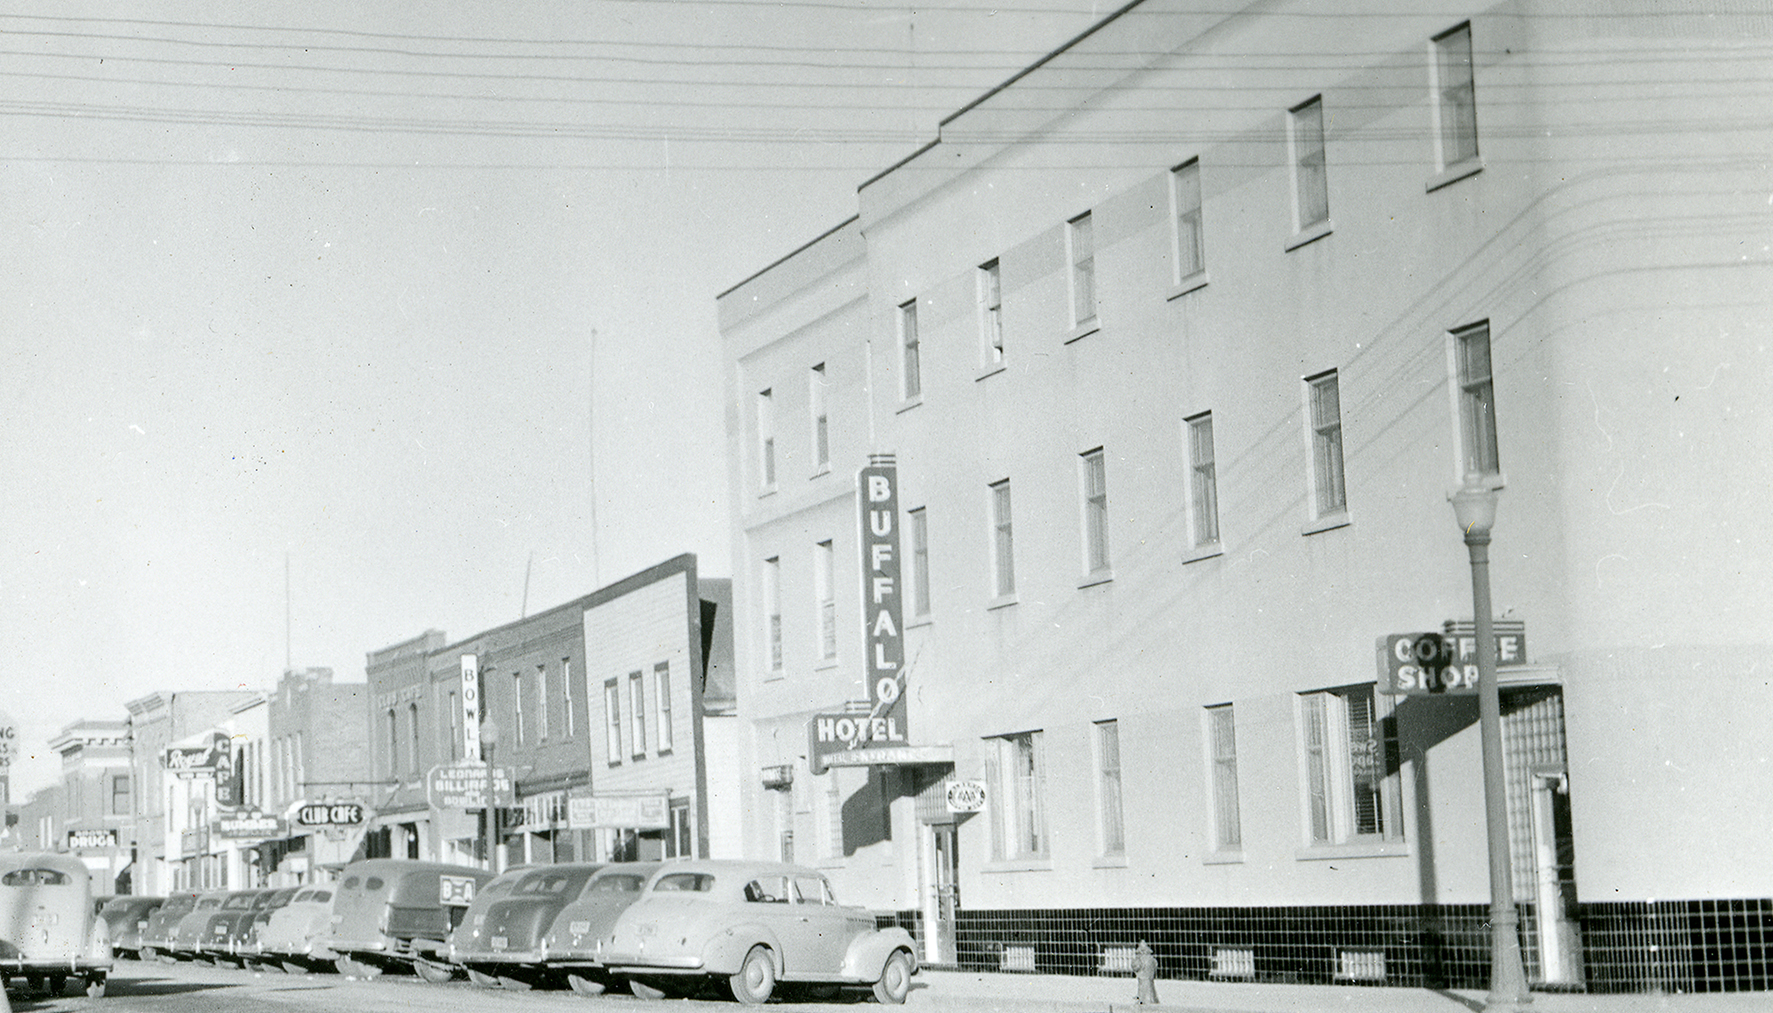 Buffalo Hotel and Cage, 1940